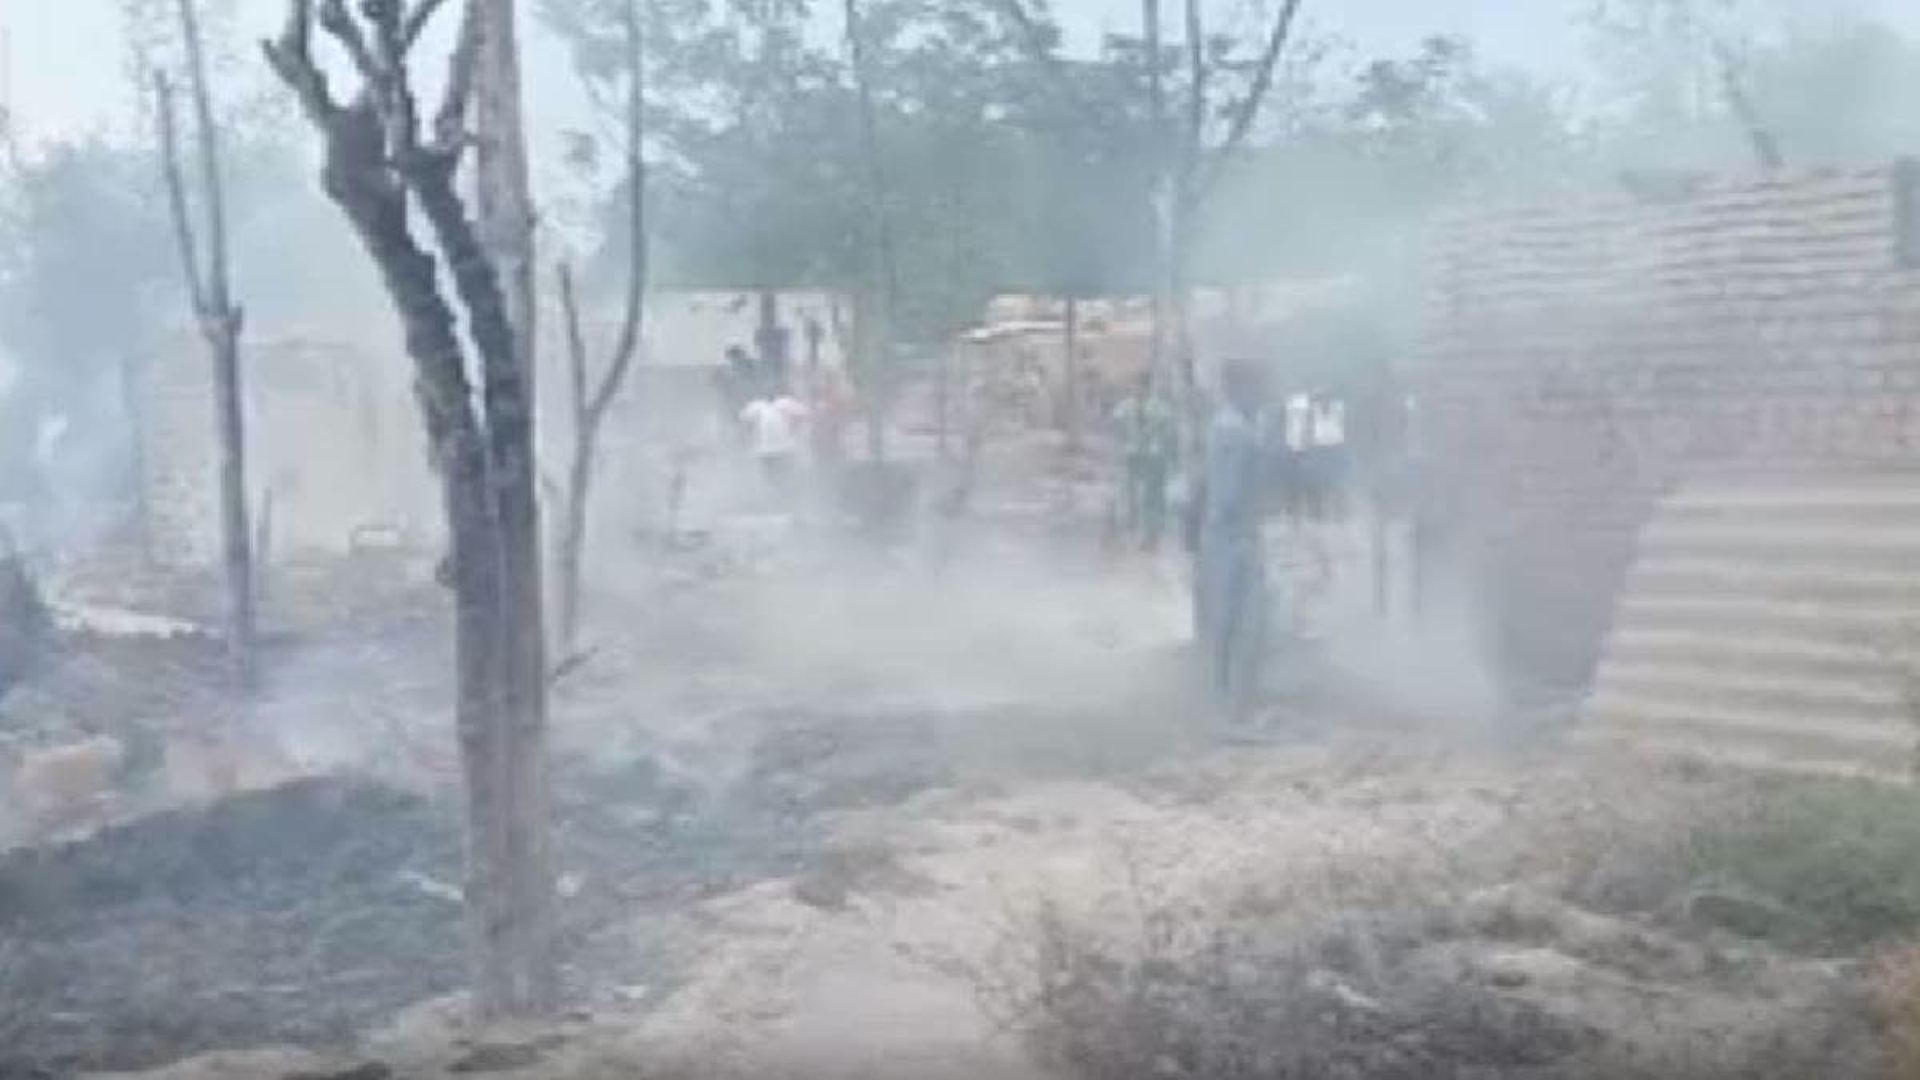 Bathinda slum fire: Gas explosion kills 2 kids, injures another